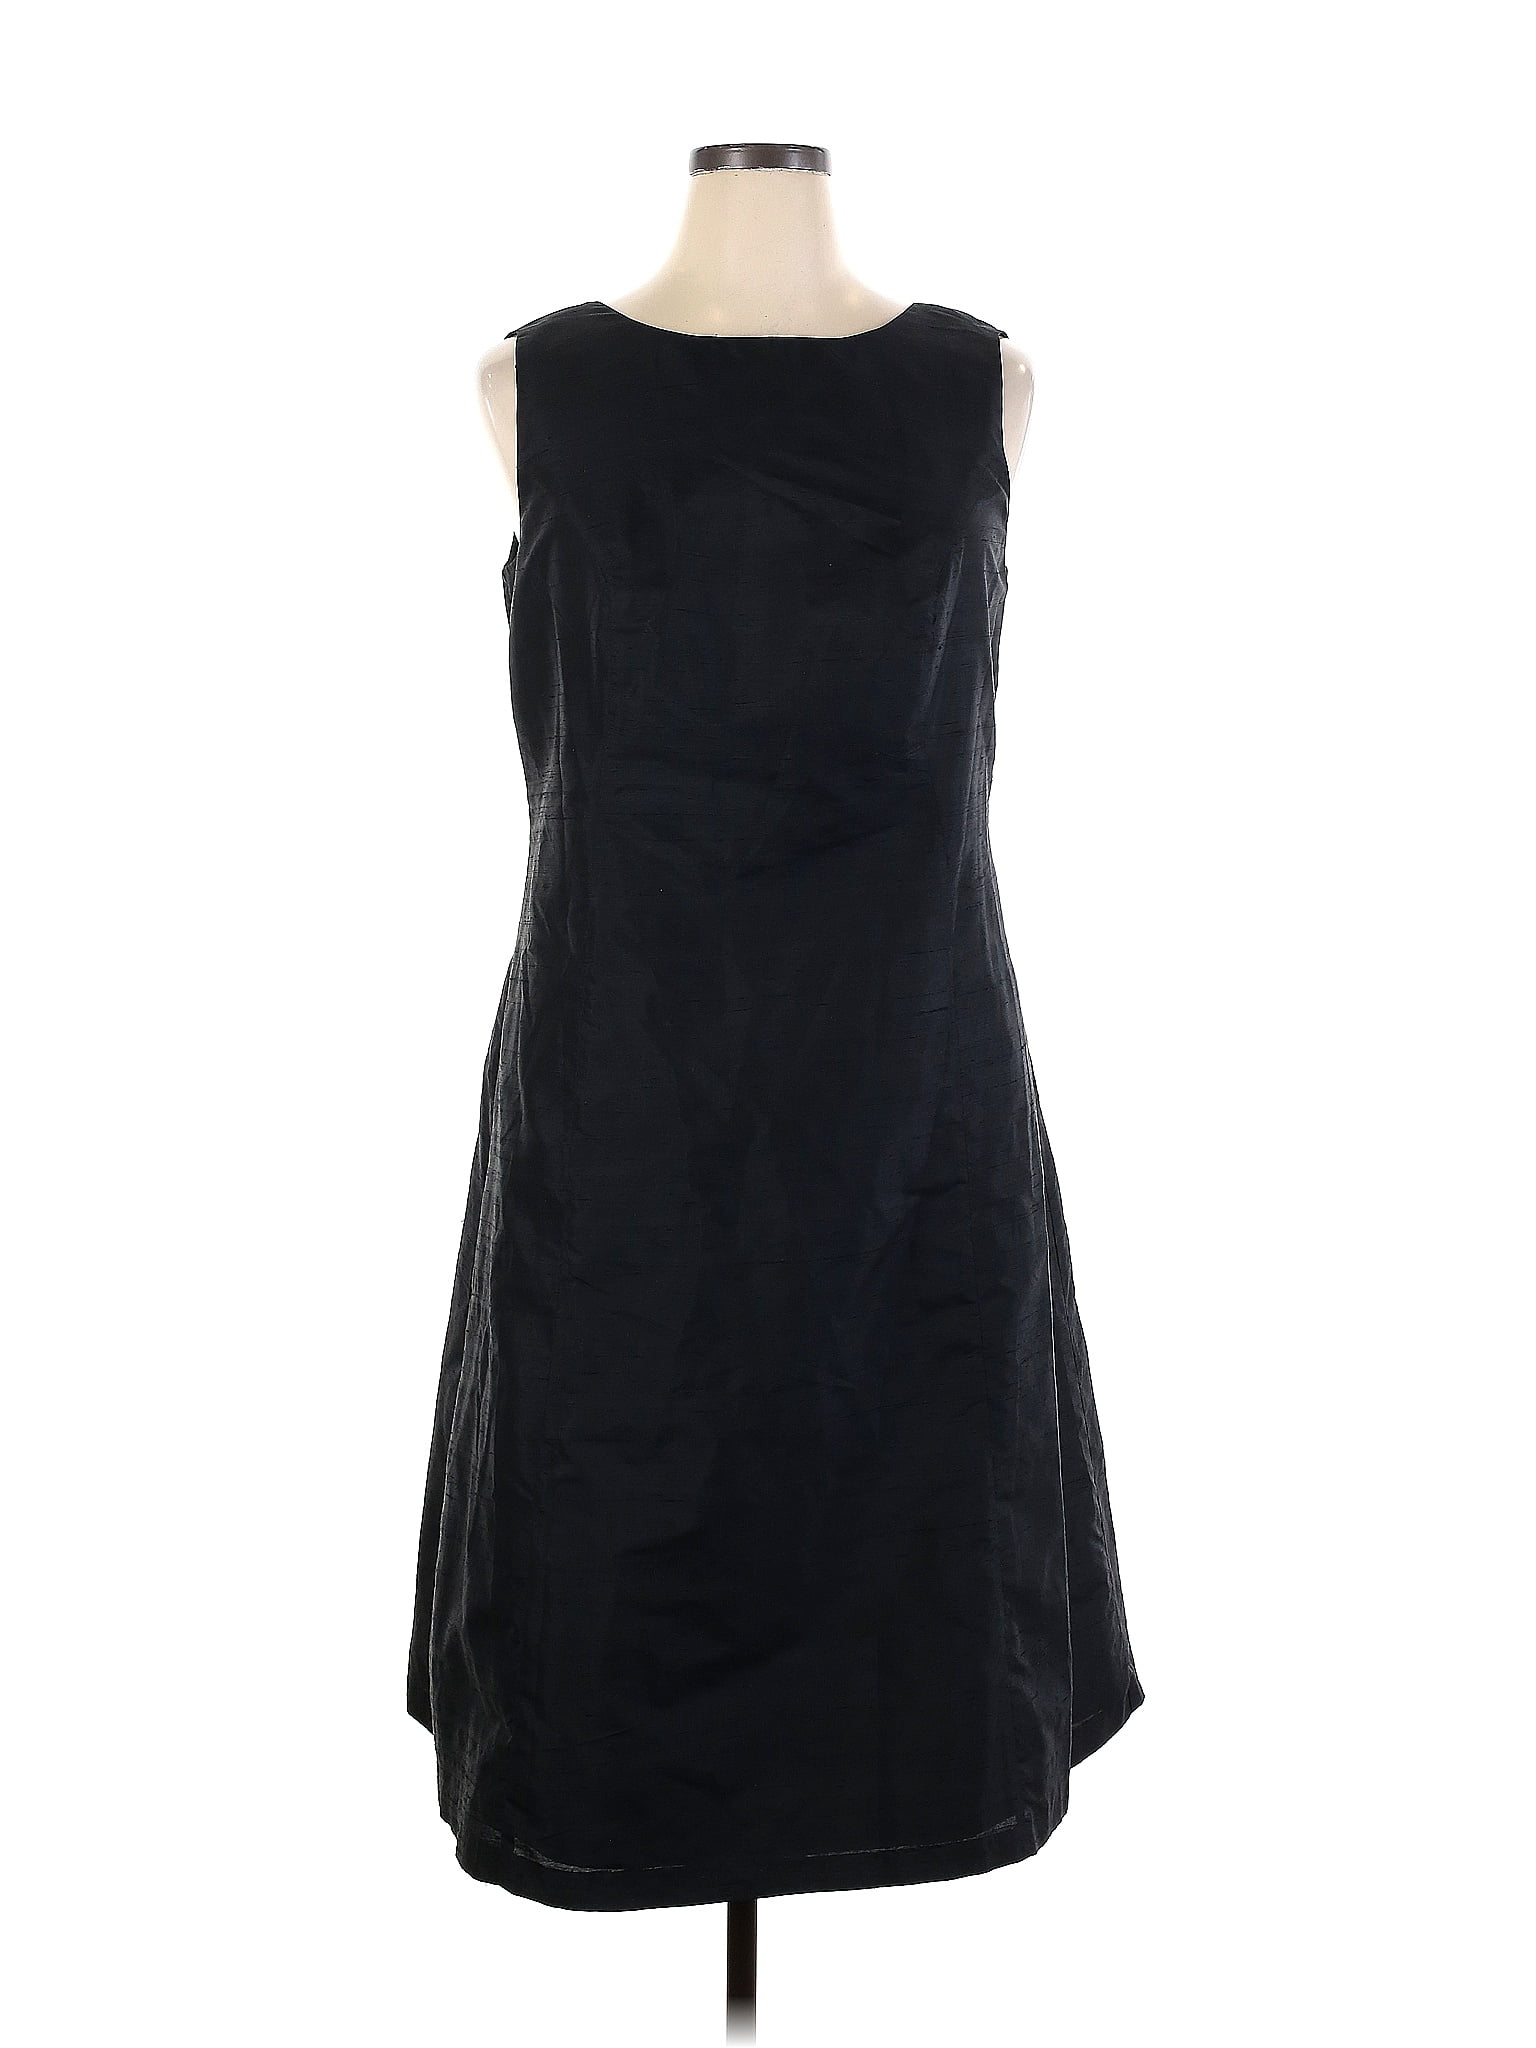 R&M Richards Black Casual Dress Size 6 - 74% off